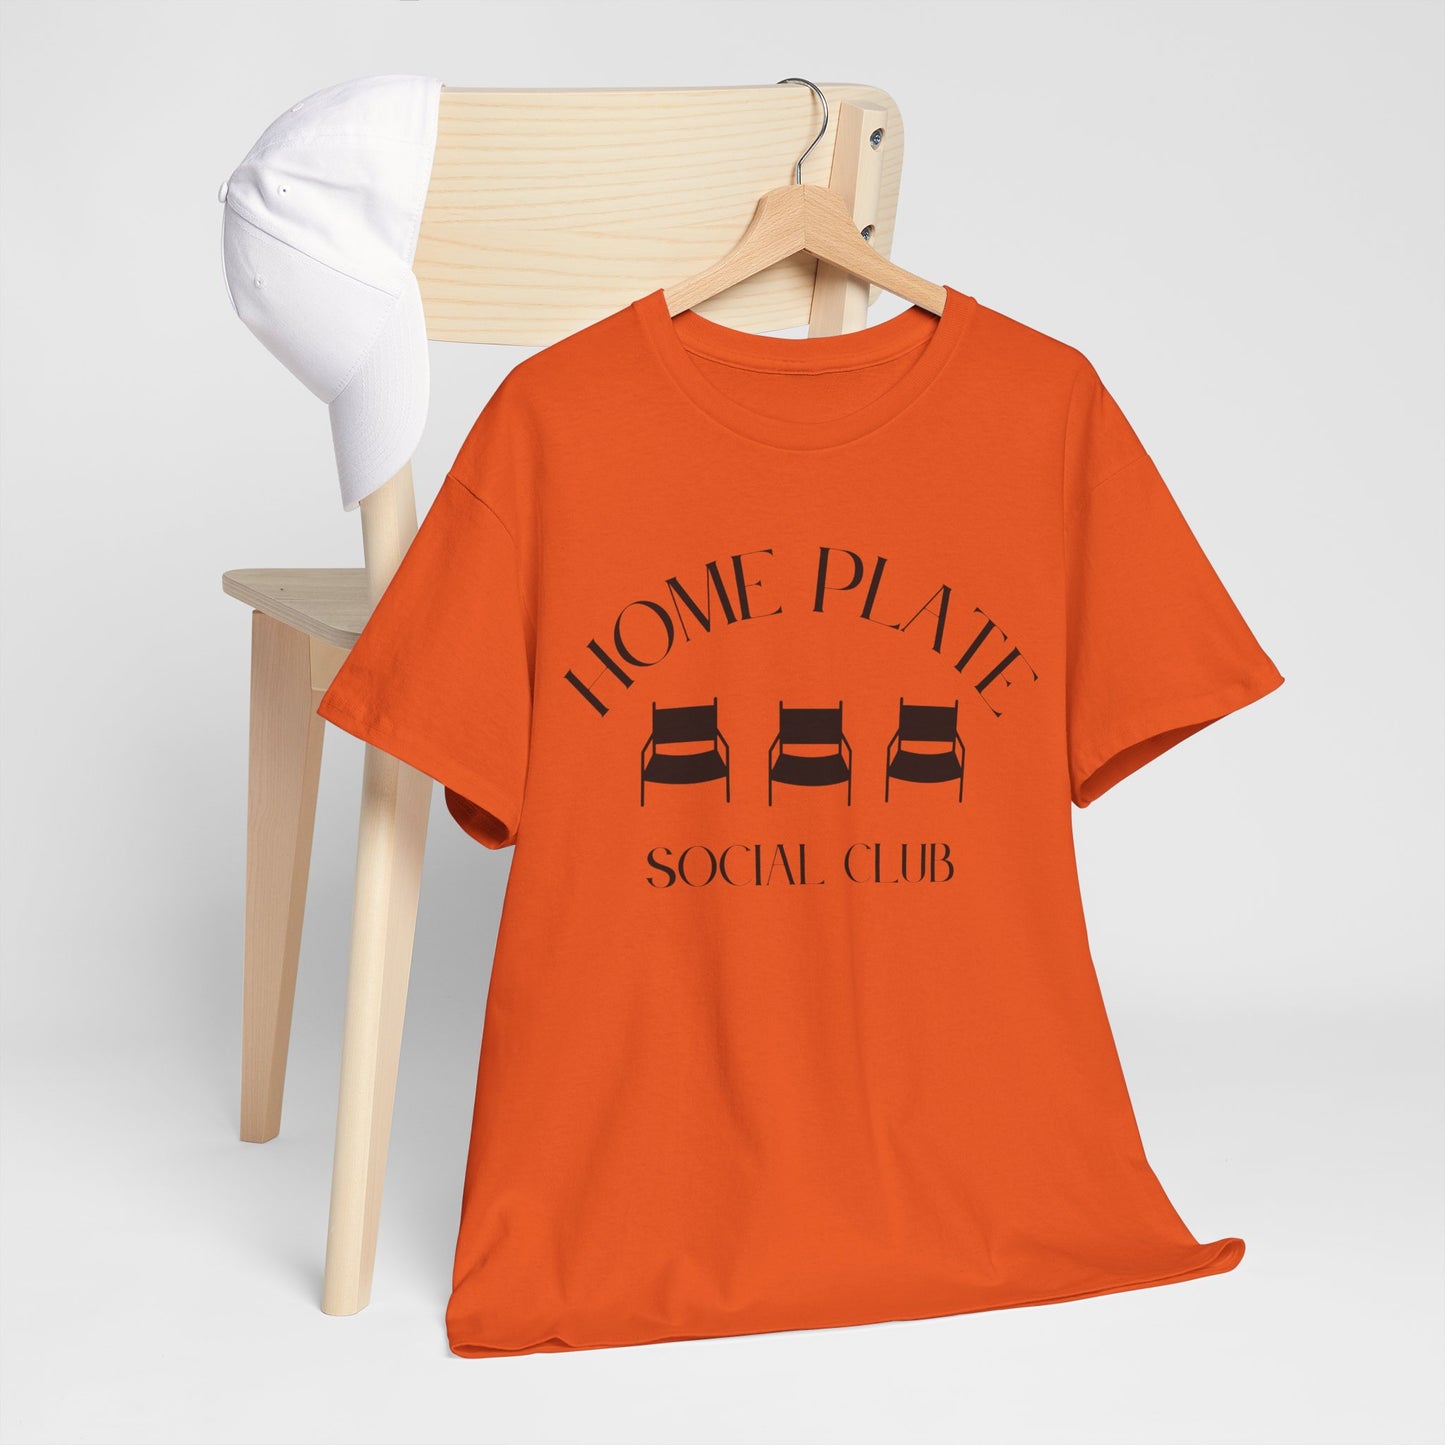 Home Plate Social Club Tee (black letters)